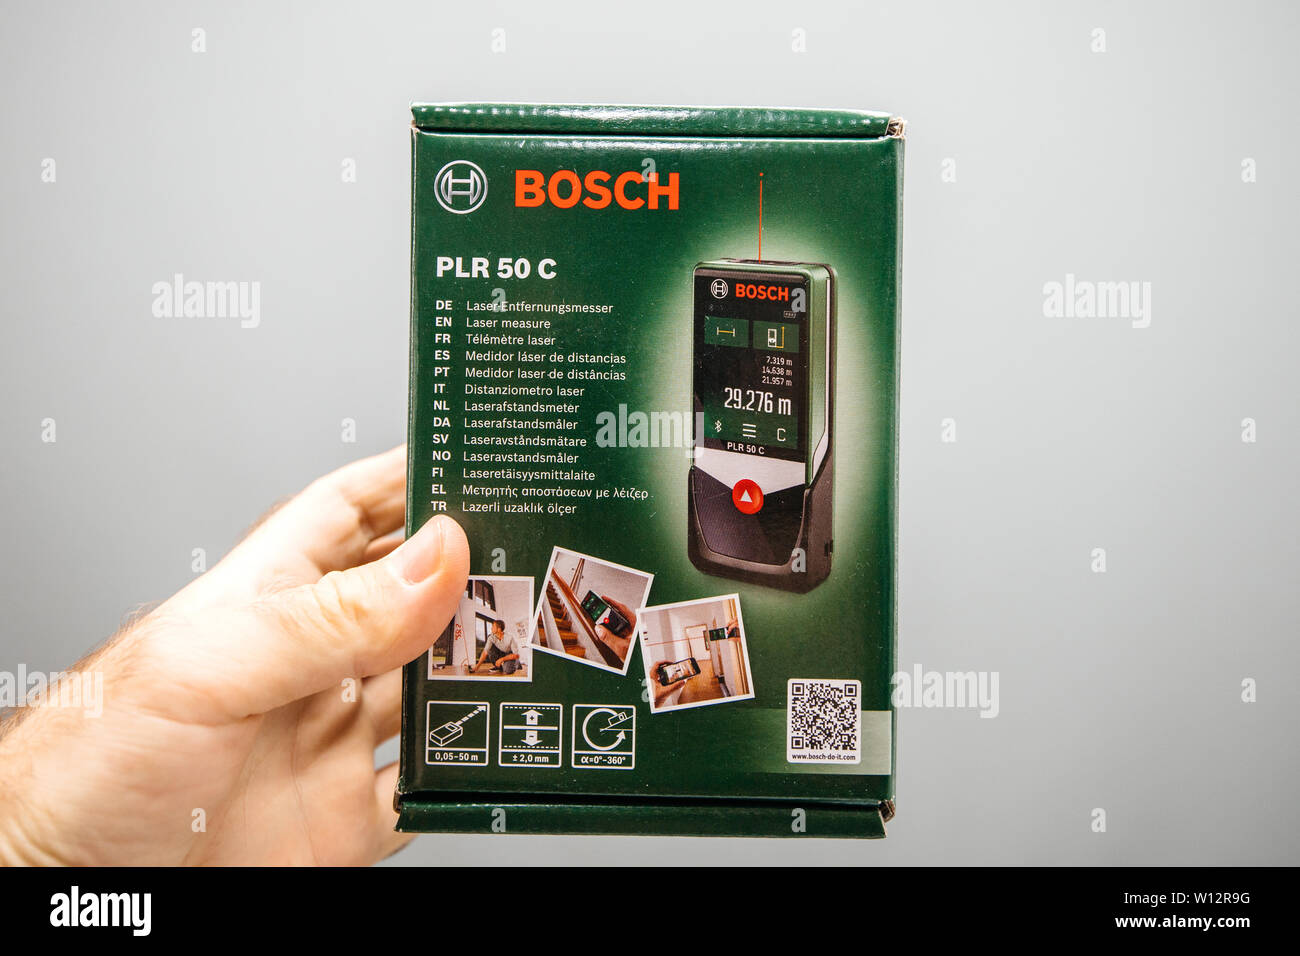 Paris, France - Jun 4, 2019: Man hand holding Bosch PLR 50 C laser measure  cardboard packaging box in hand Stock Photo - Alamy